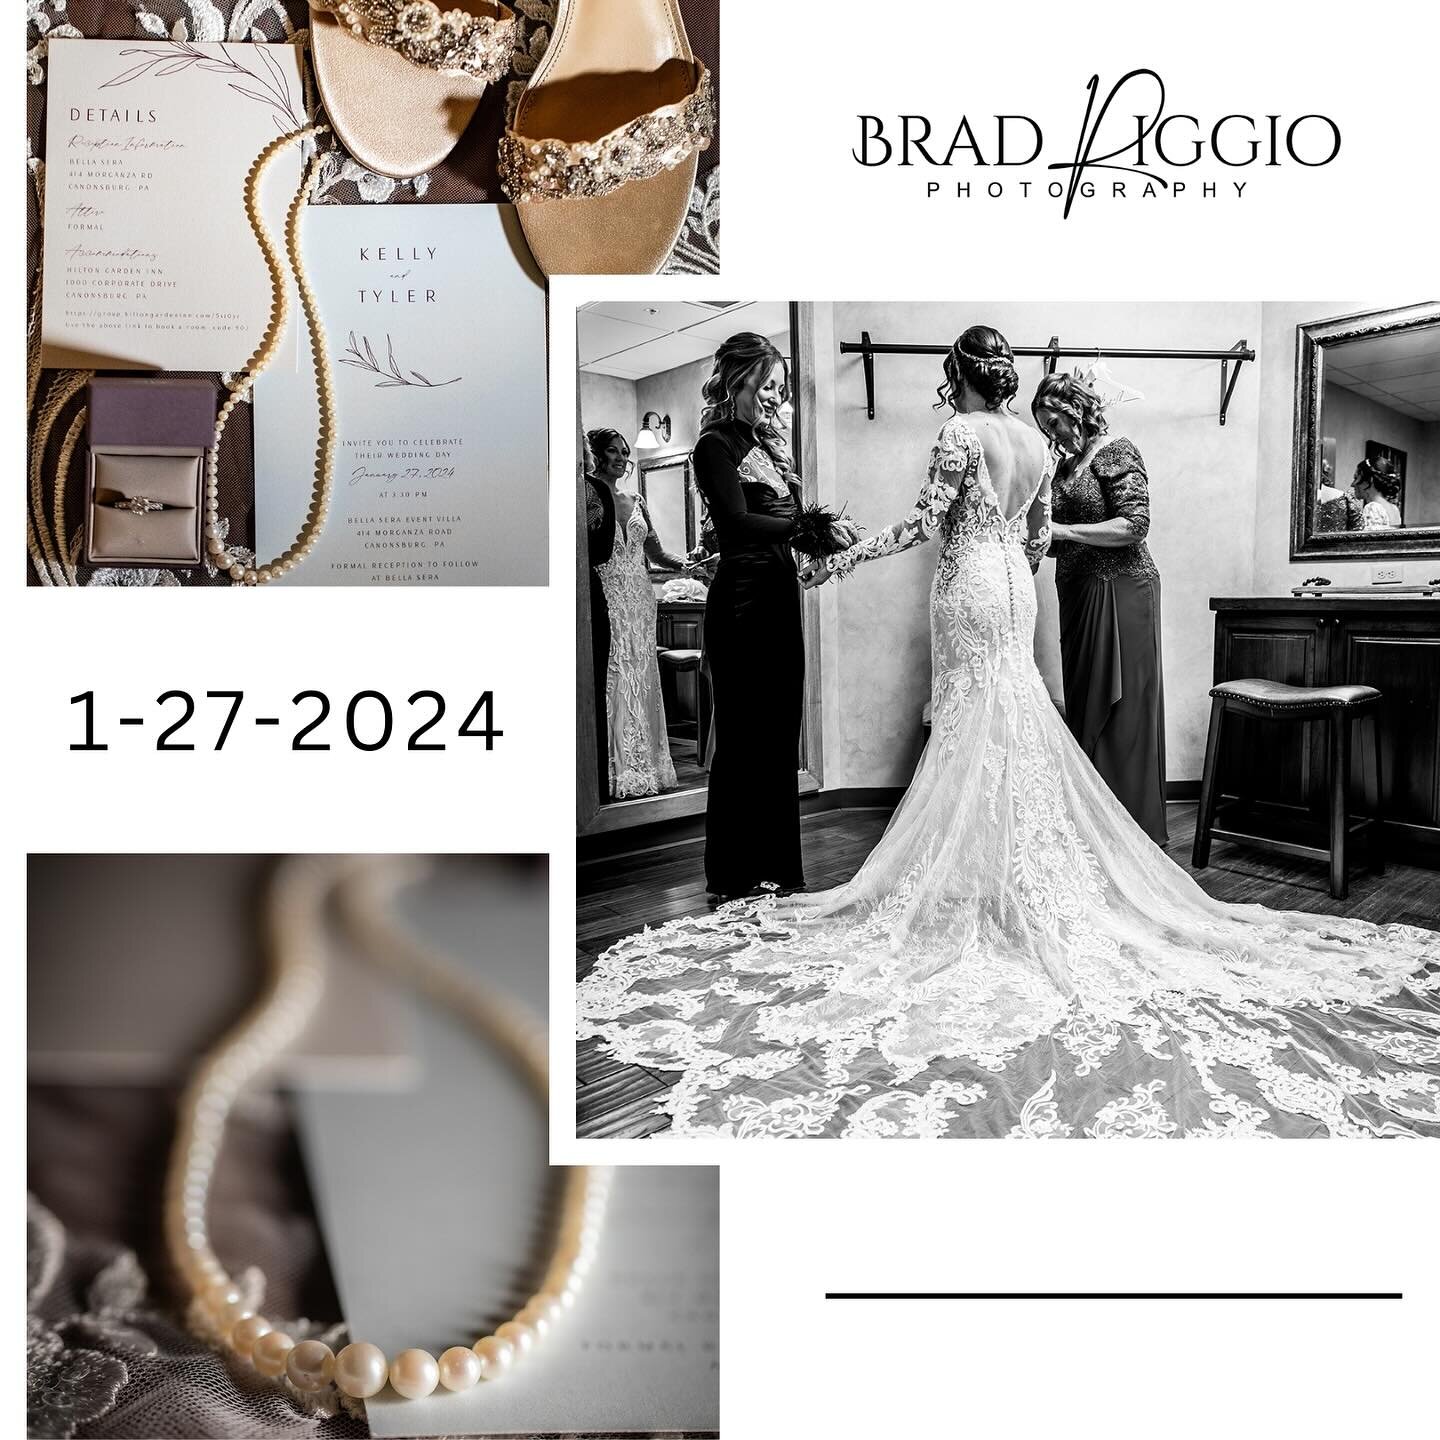 Big congratulations to a wonderful couple! Great start to the 2024 wedding season.
#bradriggio #weddingprofessionals 
#djkevinredford #bellasera_eventvilla #pittsburghwedding